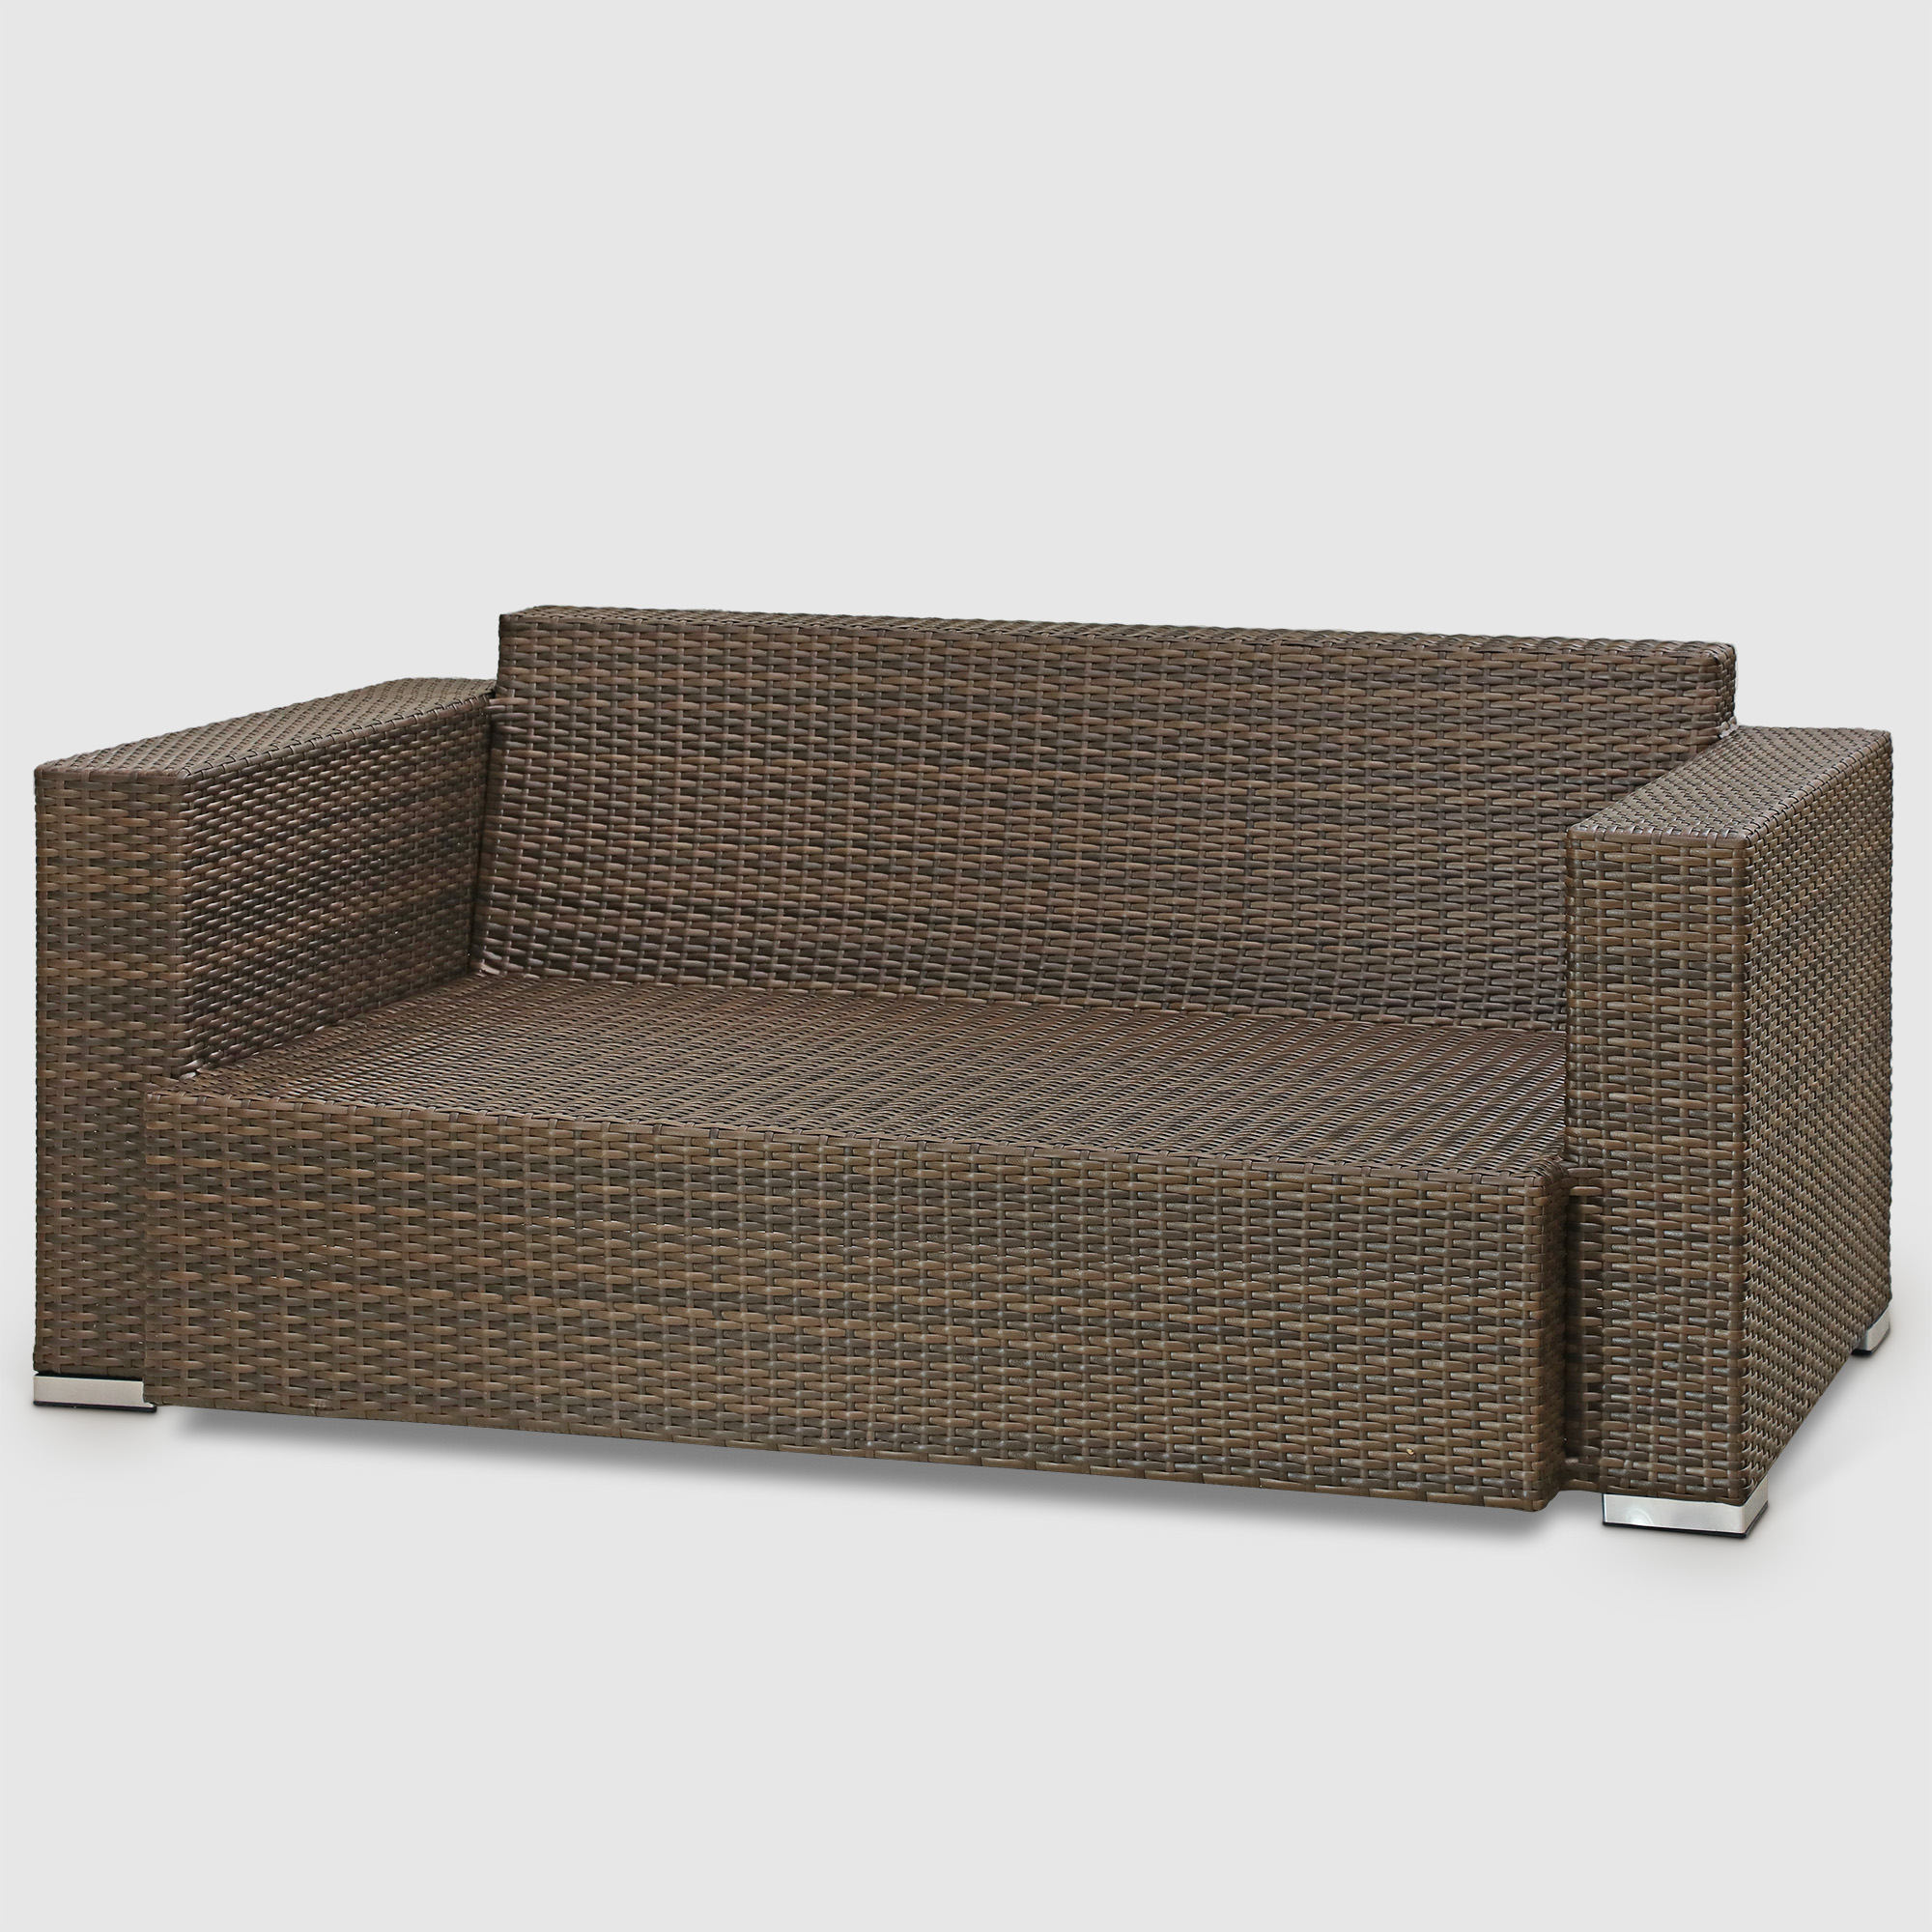 Комплект мебели Ns Rattan Cleo коричневый с бежевым 7 предметов, цвет бежевый, размер 224х88х70 - фото 9